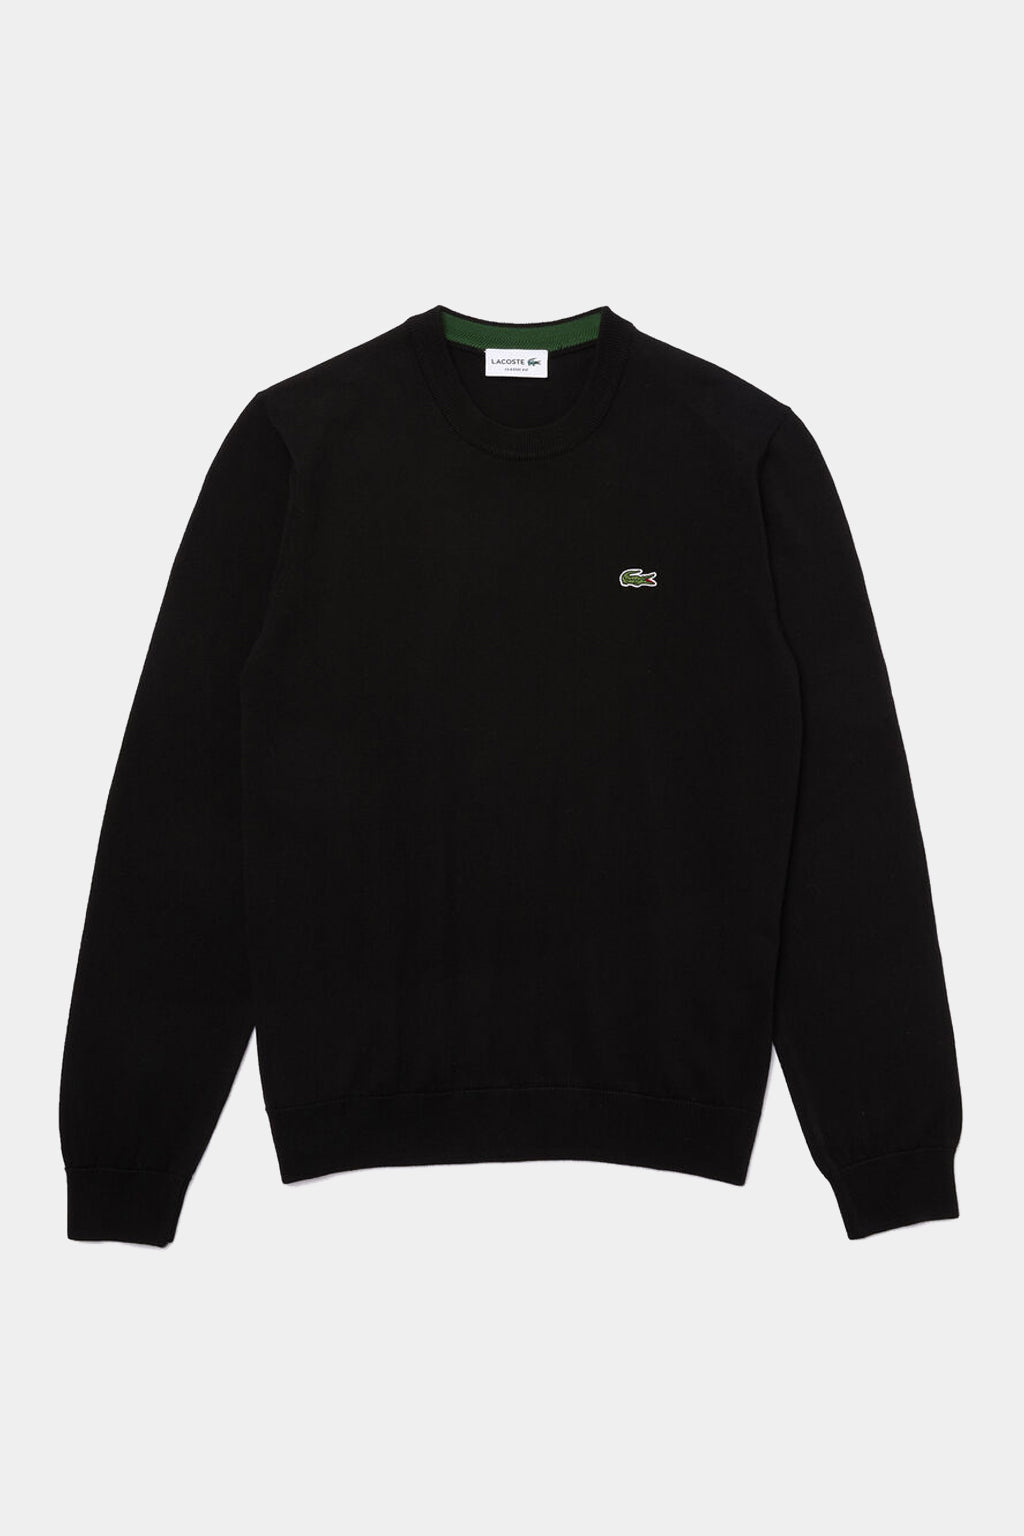 Lacoste - Organic Cotton Crew Neck Sweater